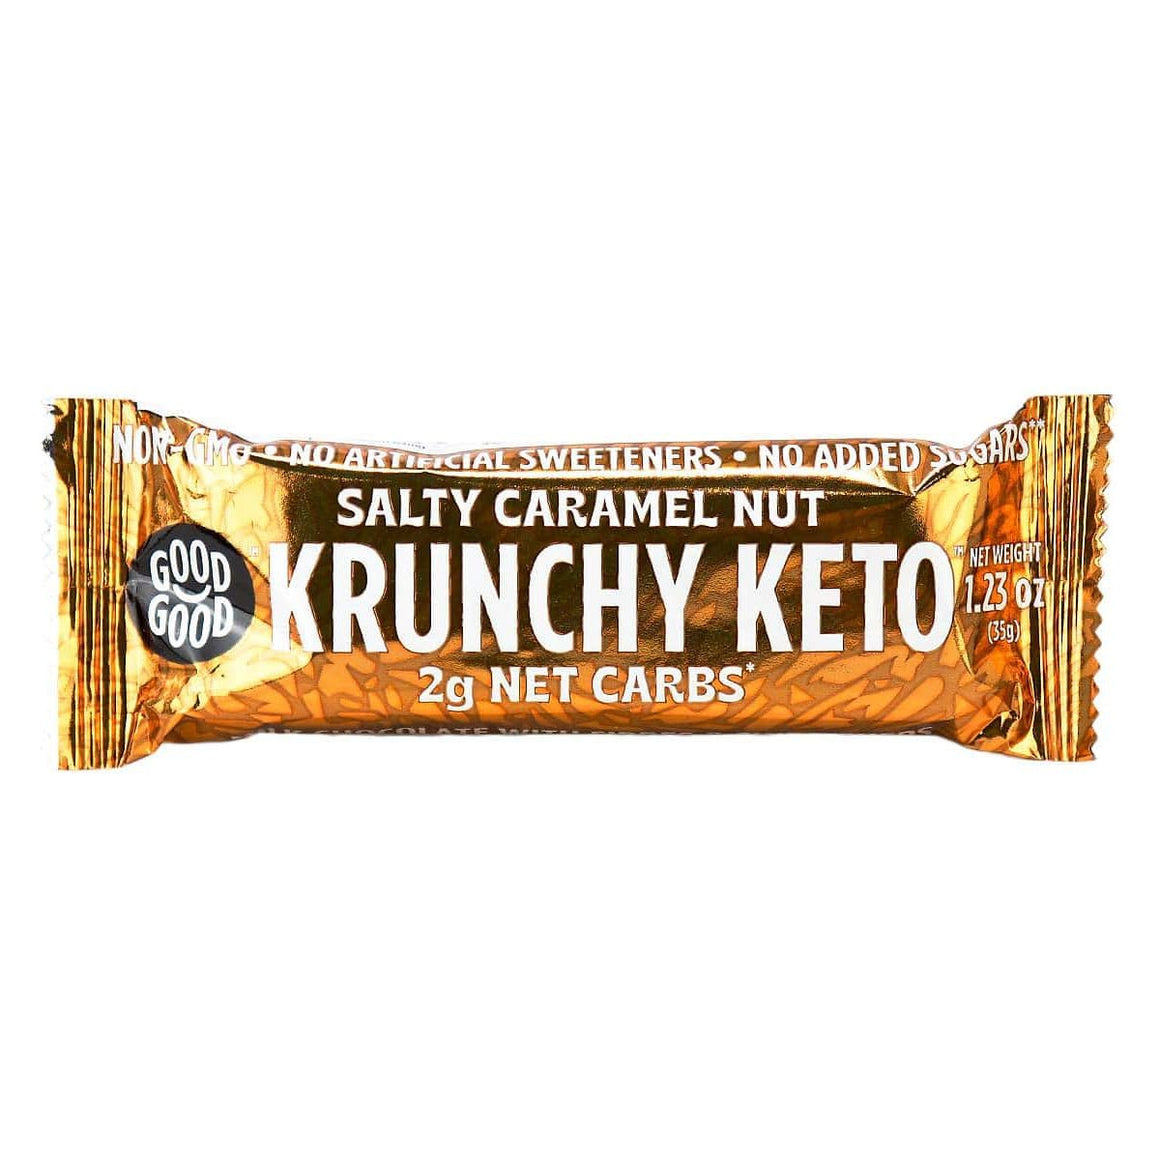 Good Good - Krunchy Keto - Salty Caramel Nut - 35g